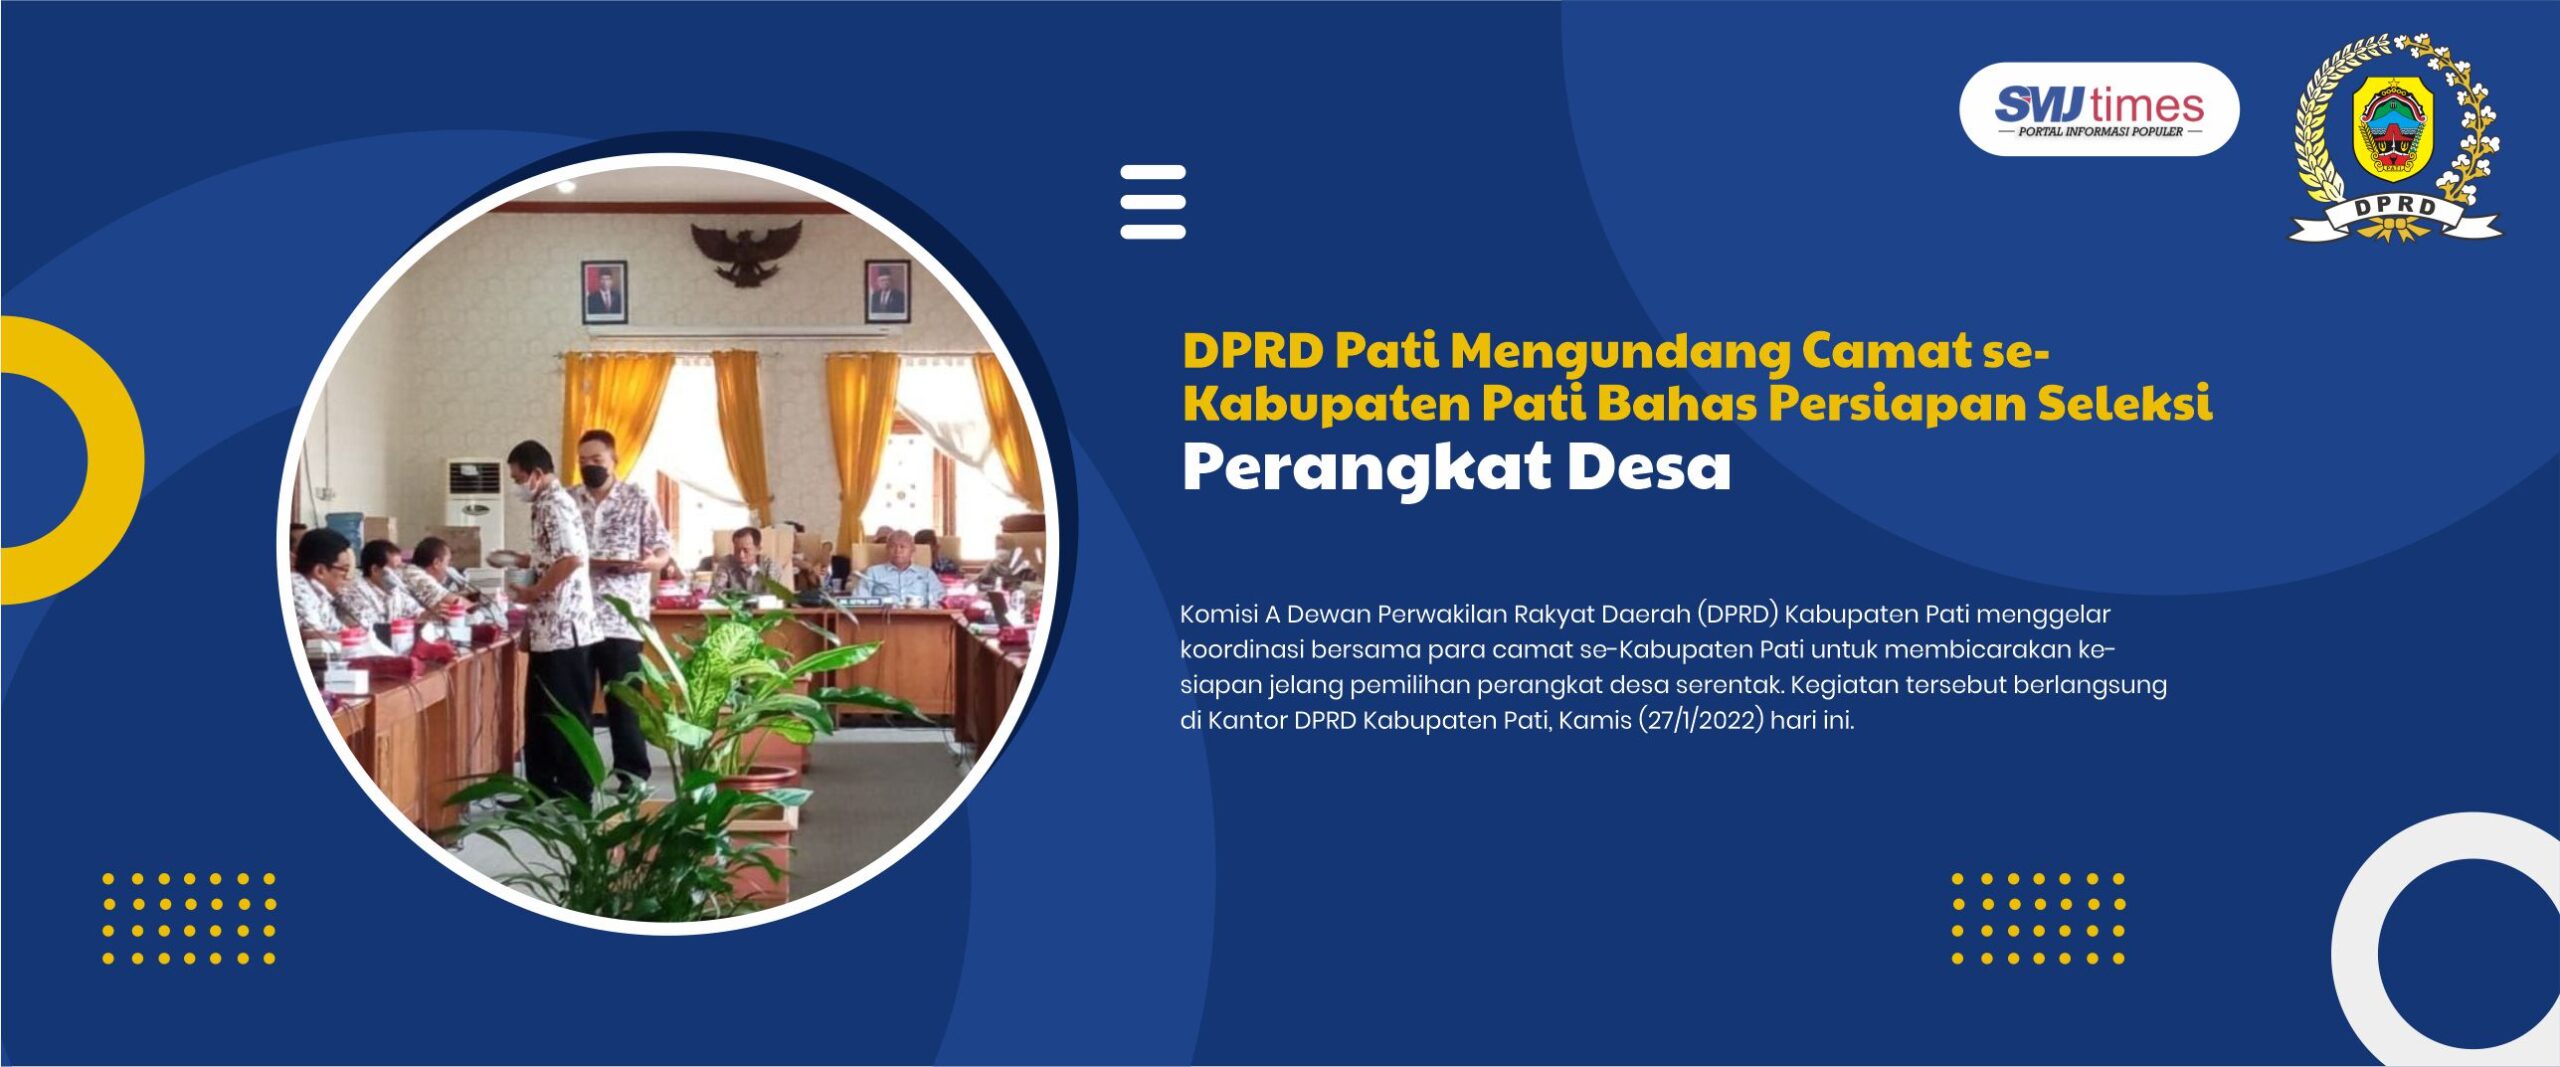 DPRD Pati Mengundang Camat se-Kabupaten Pati Bahas Persiapan Seleksi Perangkat Desa